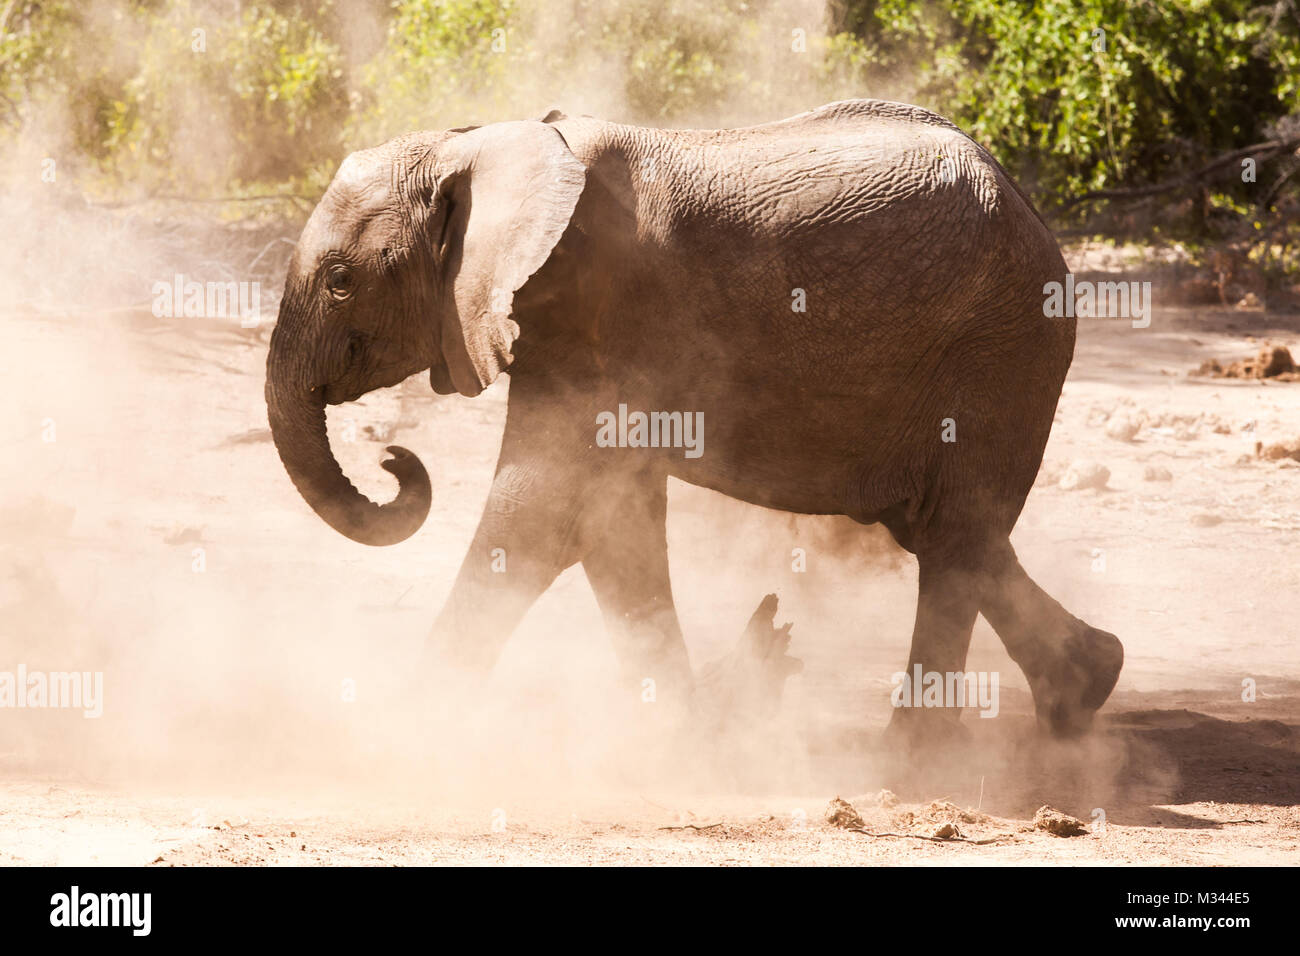 Elephant walking in desert, Namibia Stock Photo